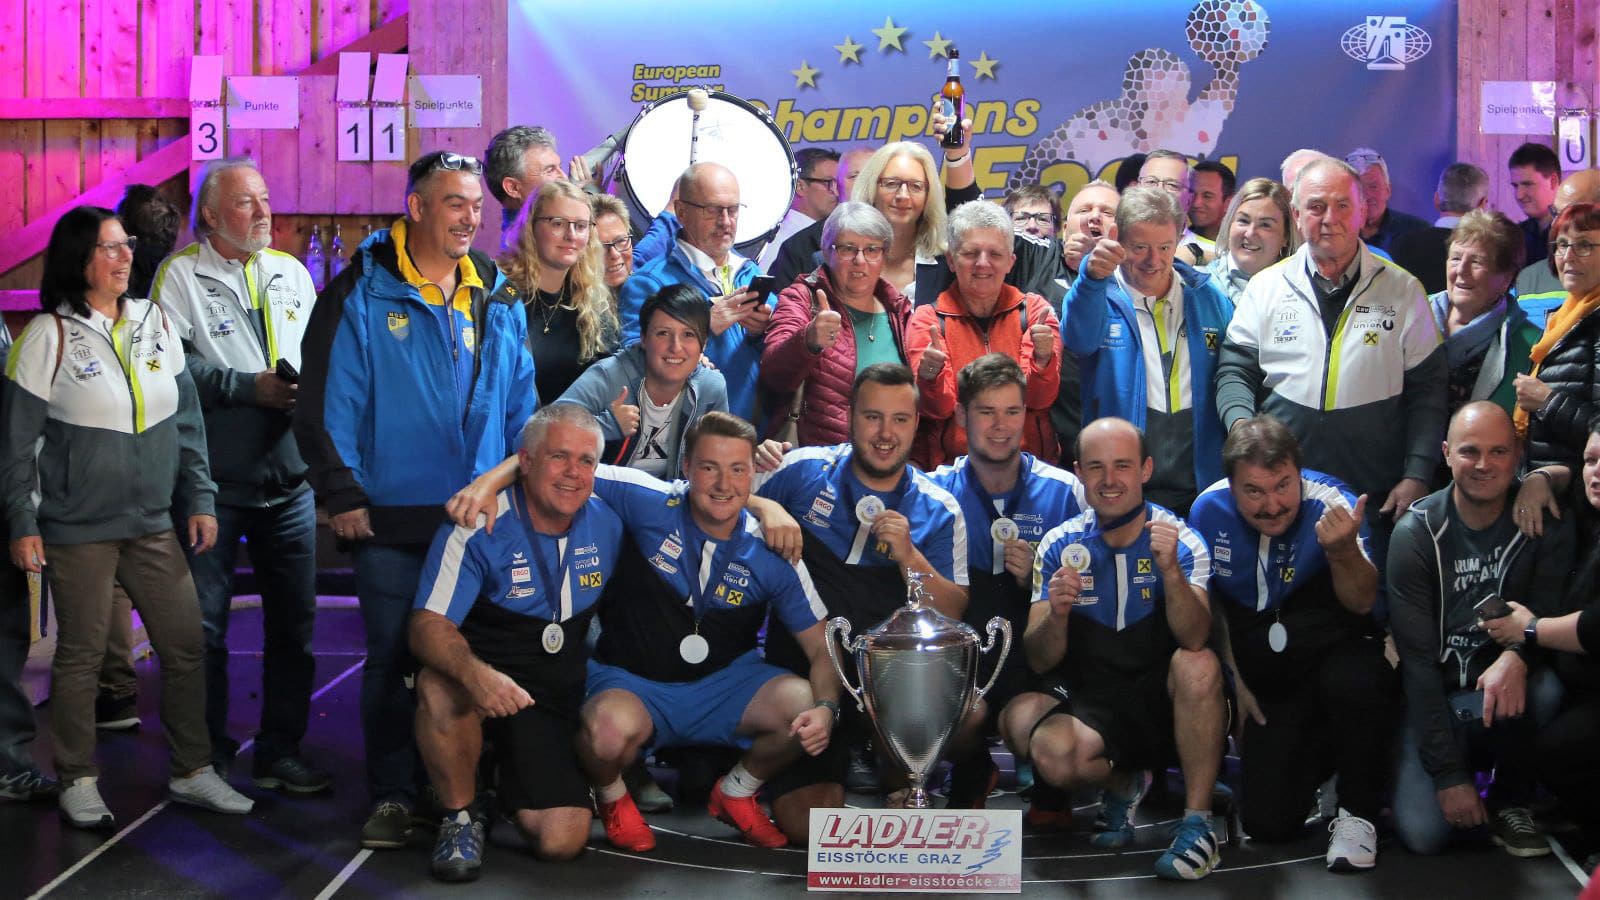 ESV Union Ladler Wang Gewinner der Champions League 2021